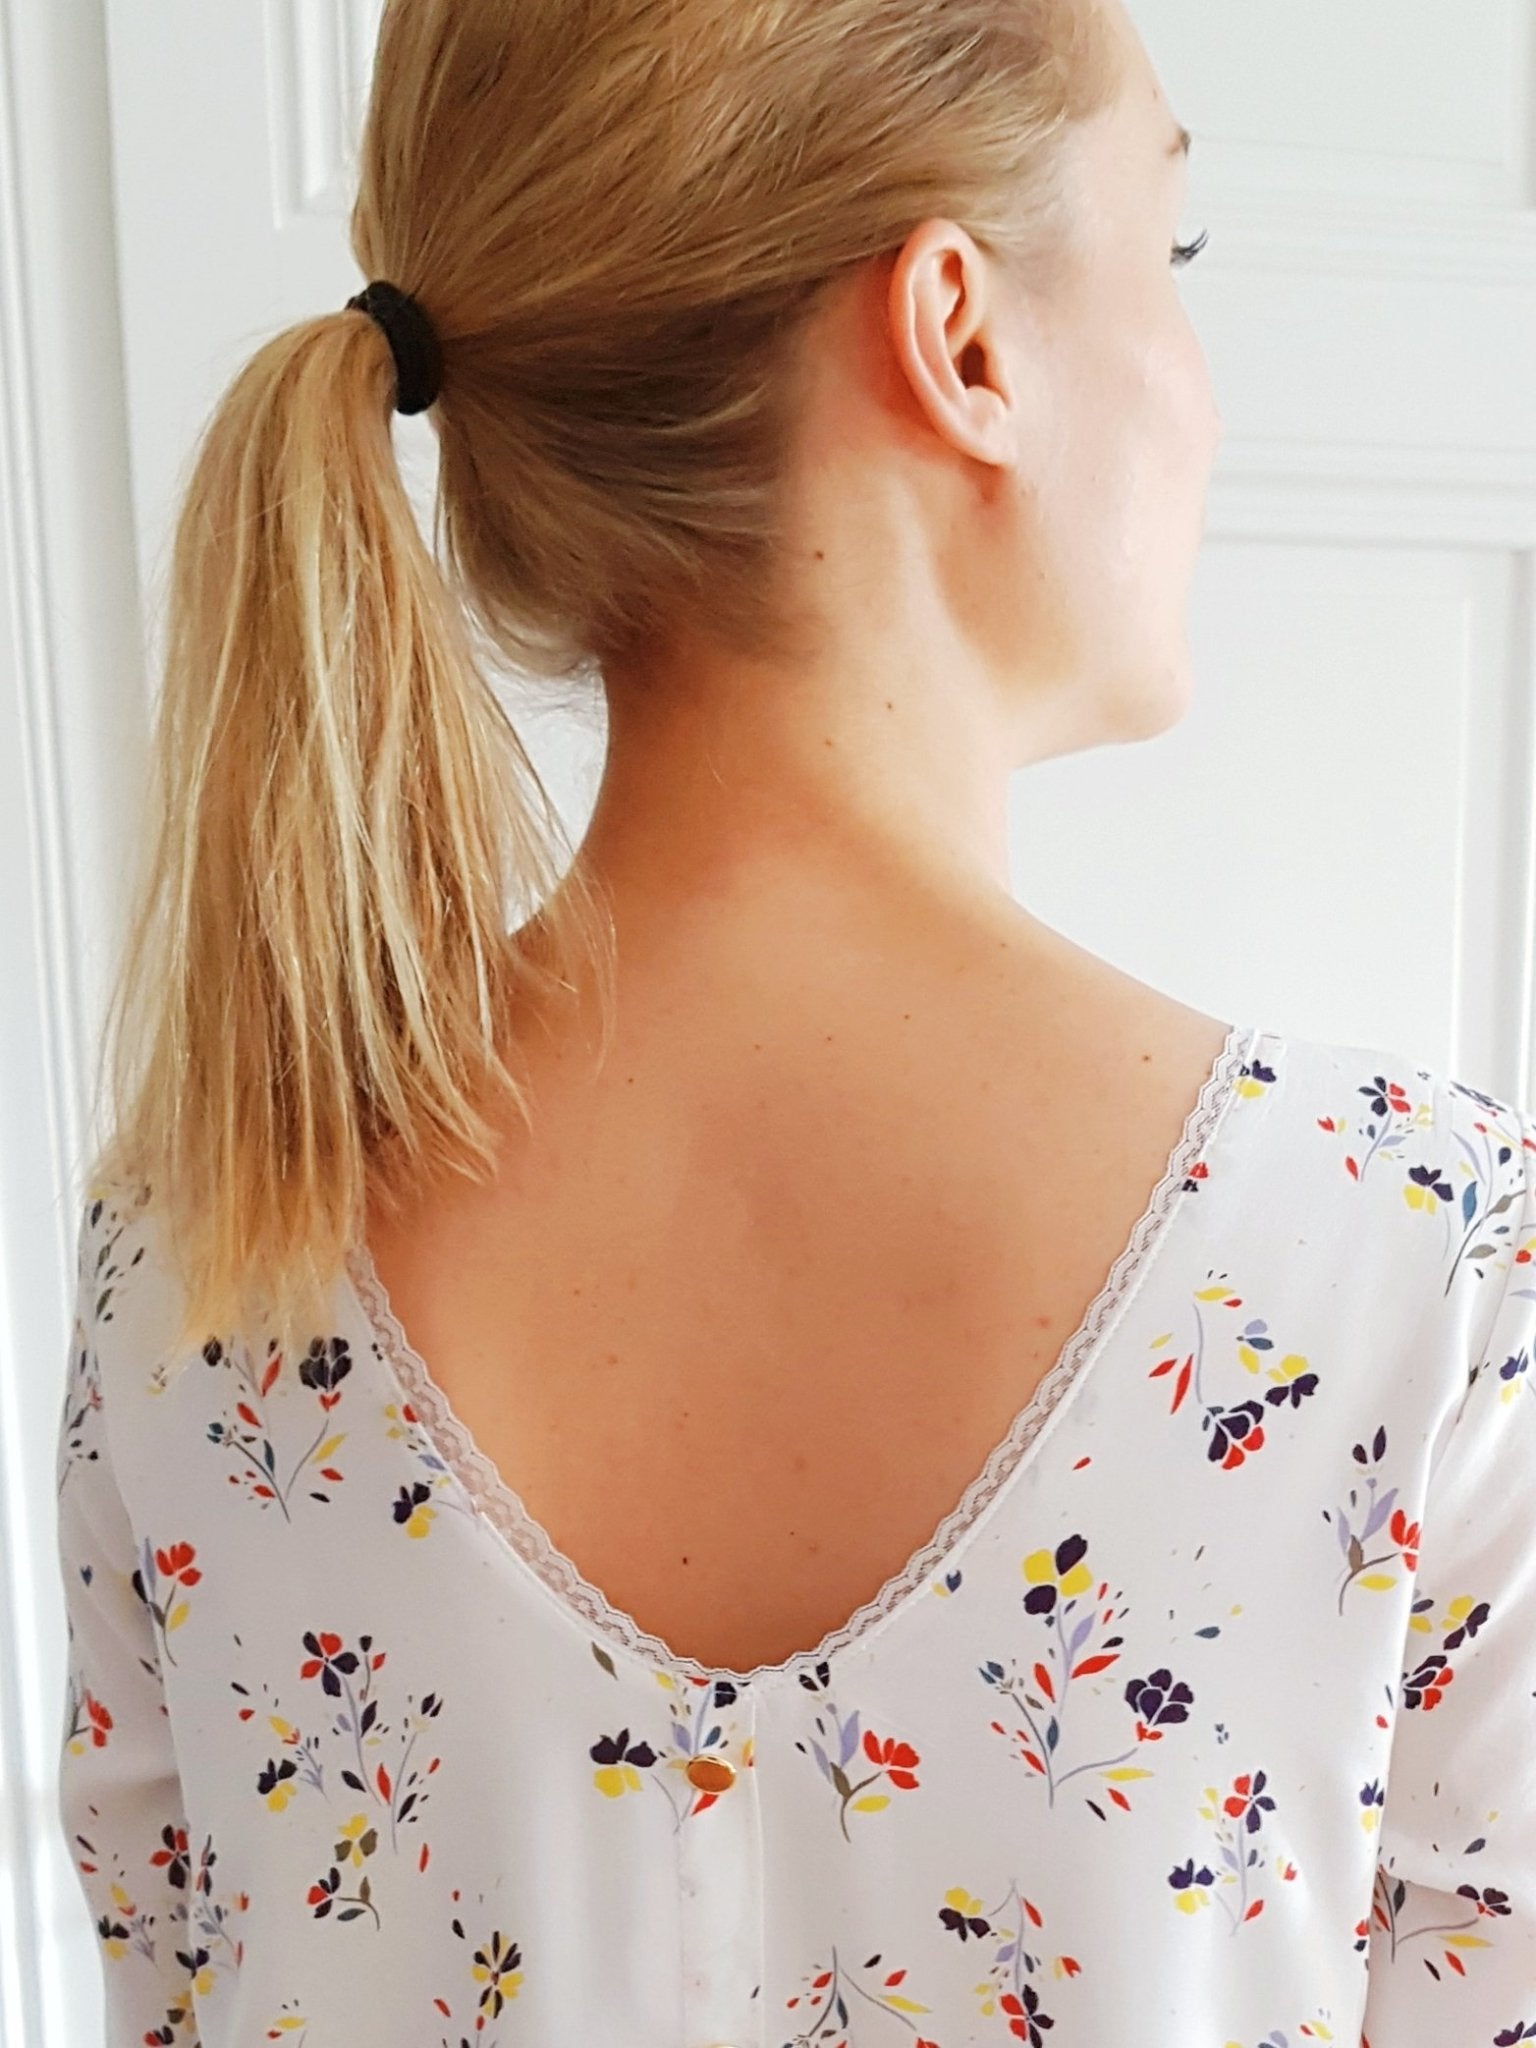 Poppy blouse - pattern PDF or paper - Joli Lab